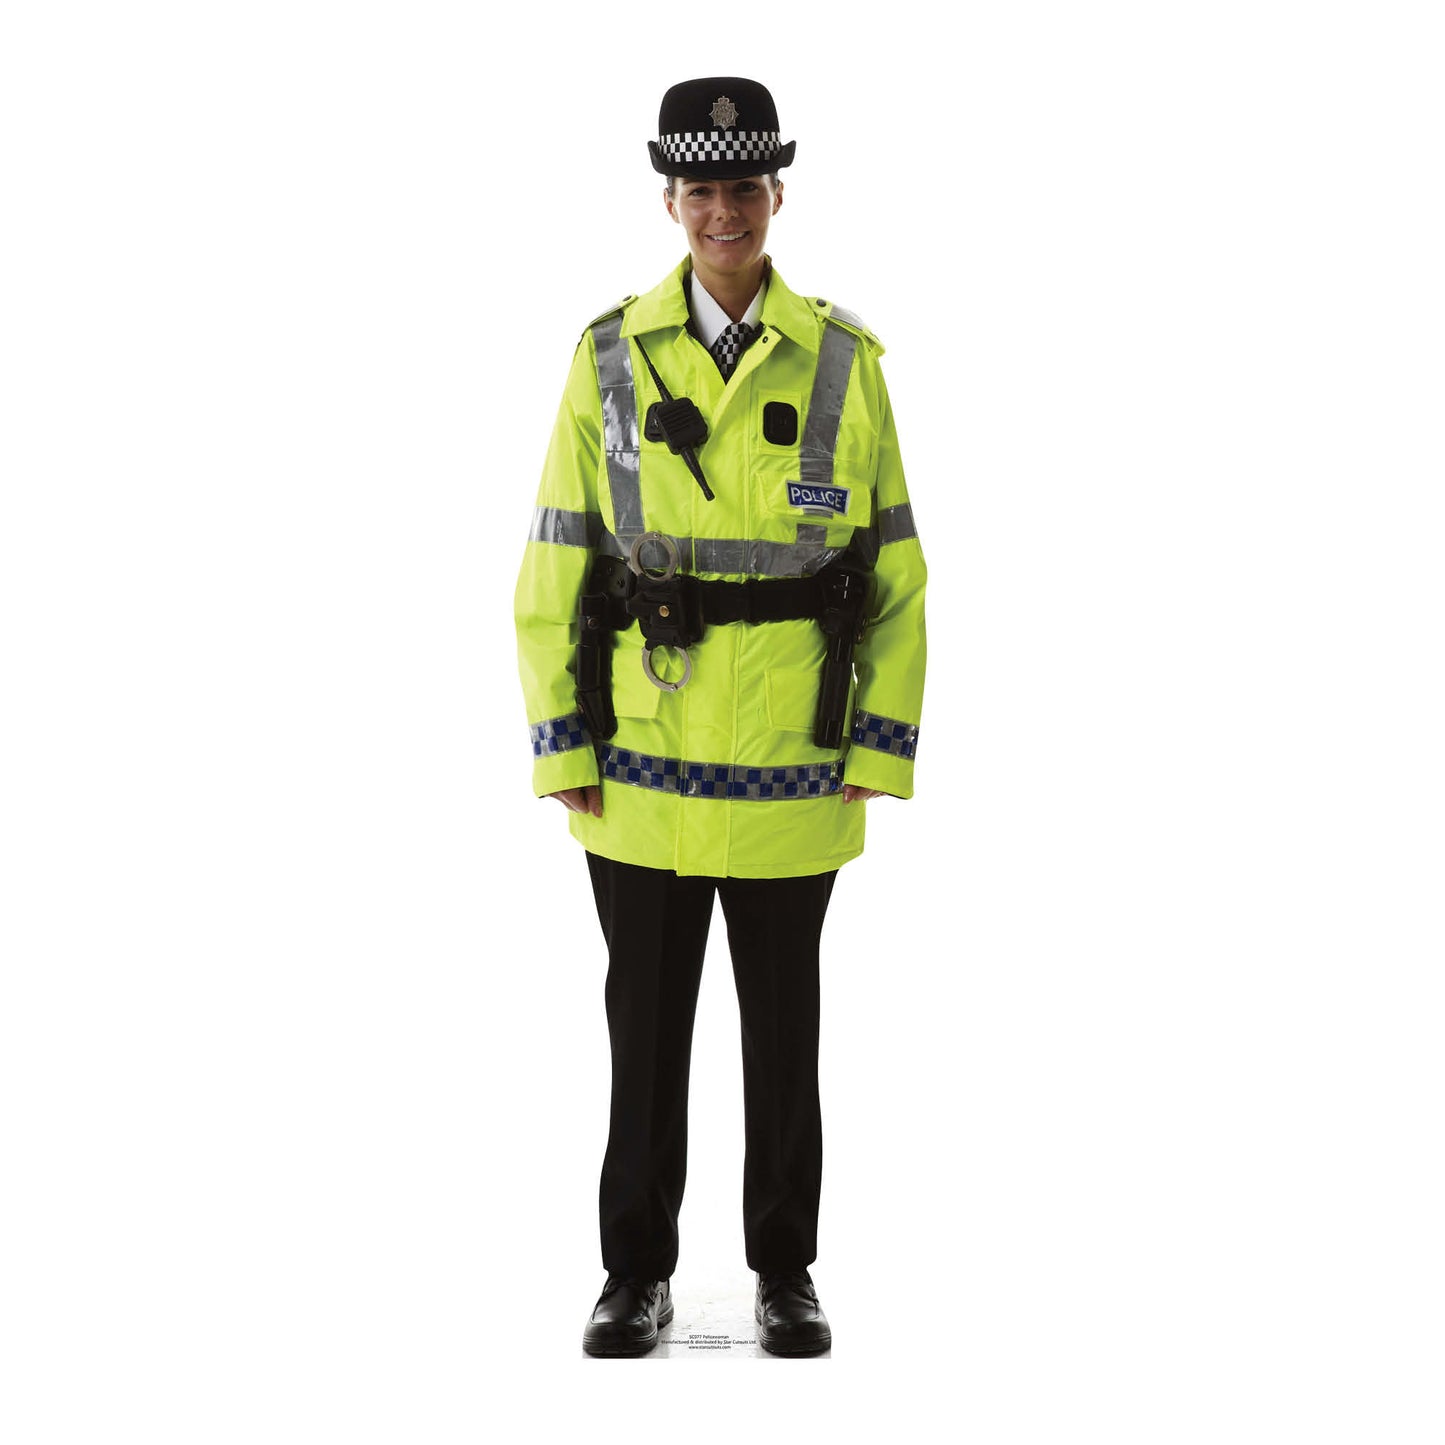 British  Policewoman Cardboard Cutout Lifesize